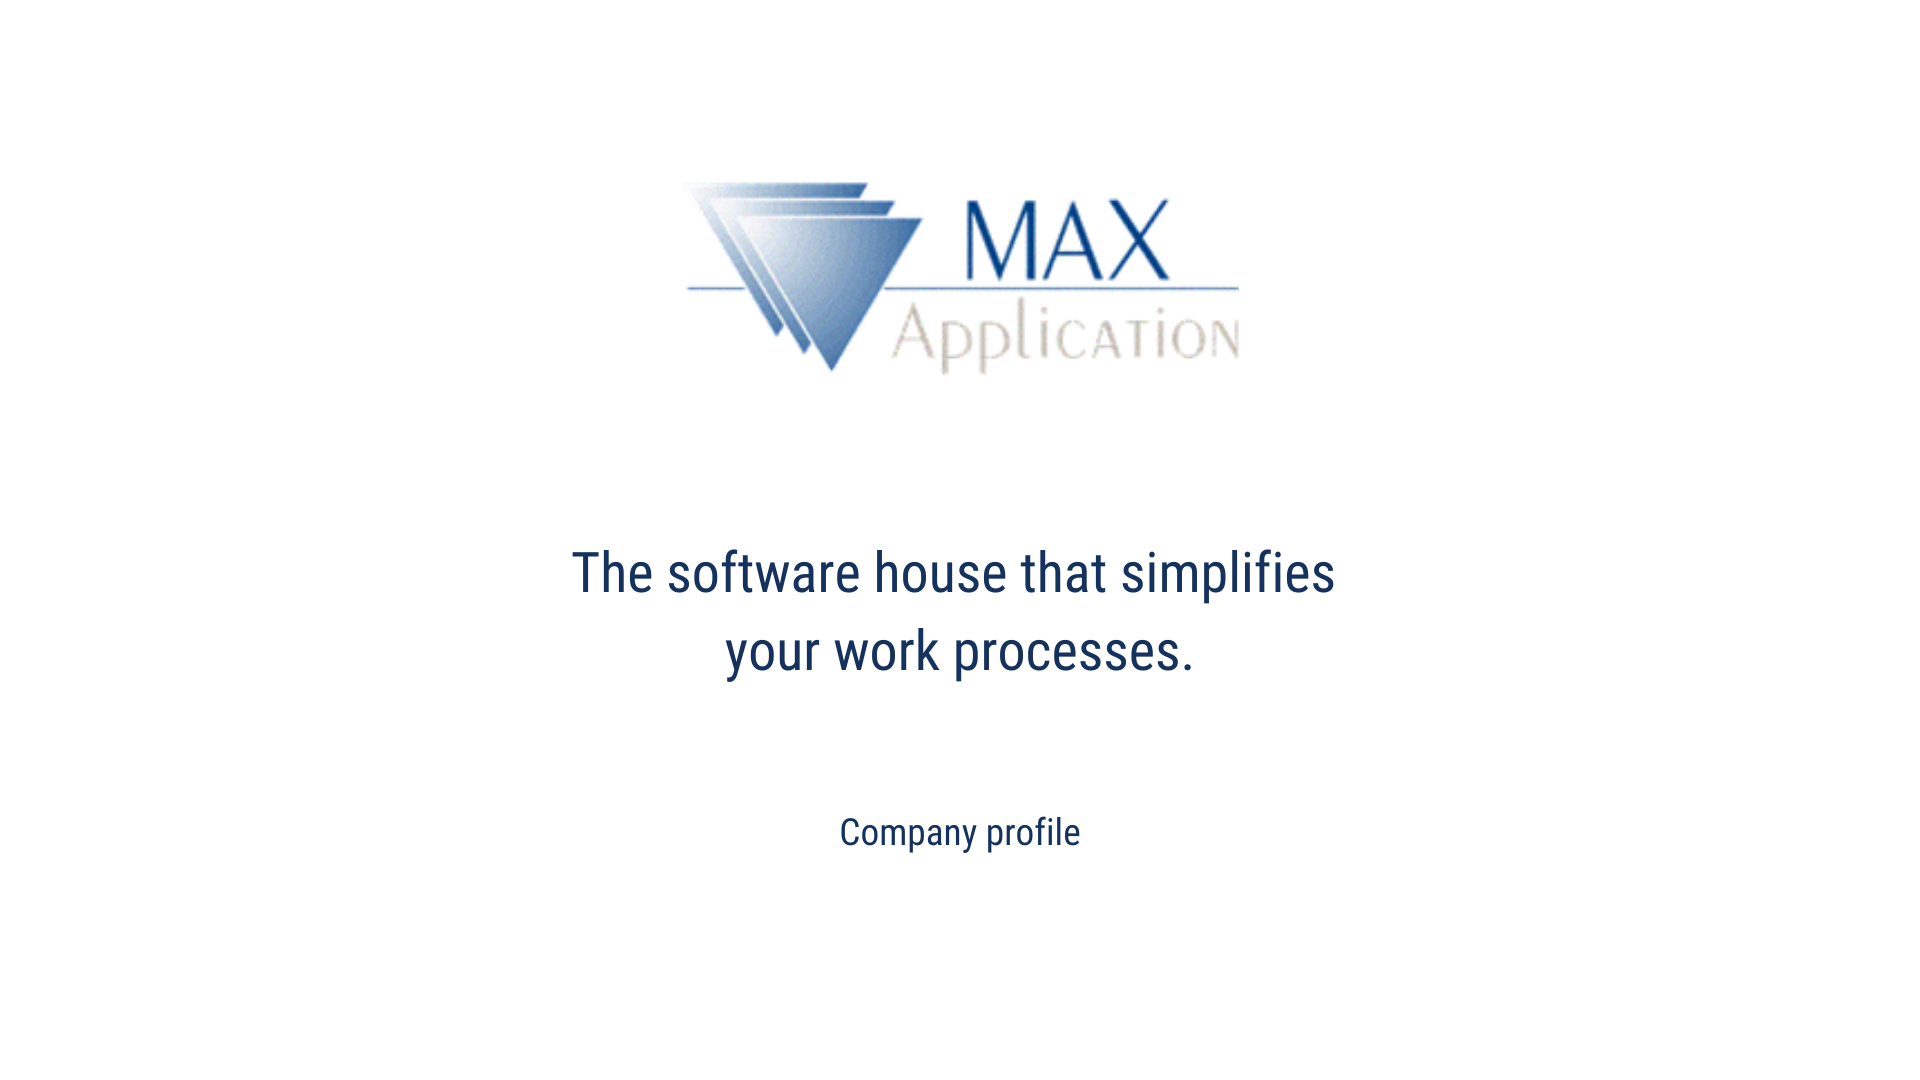 Max Application presentation